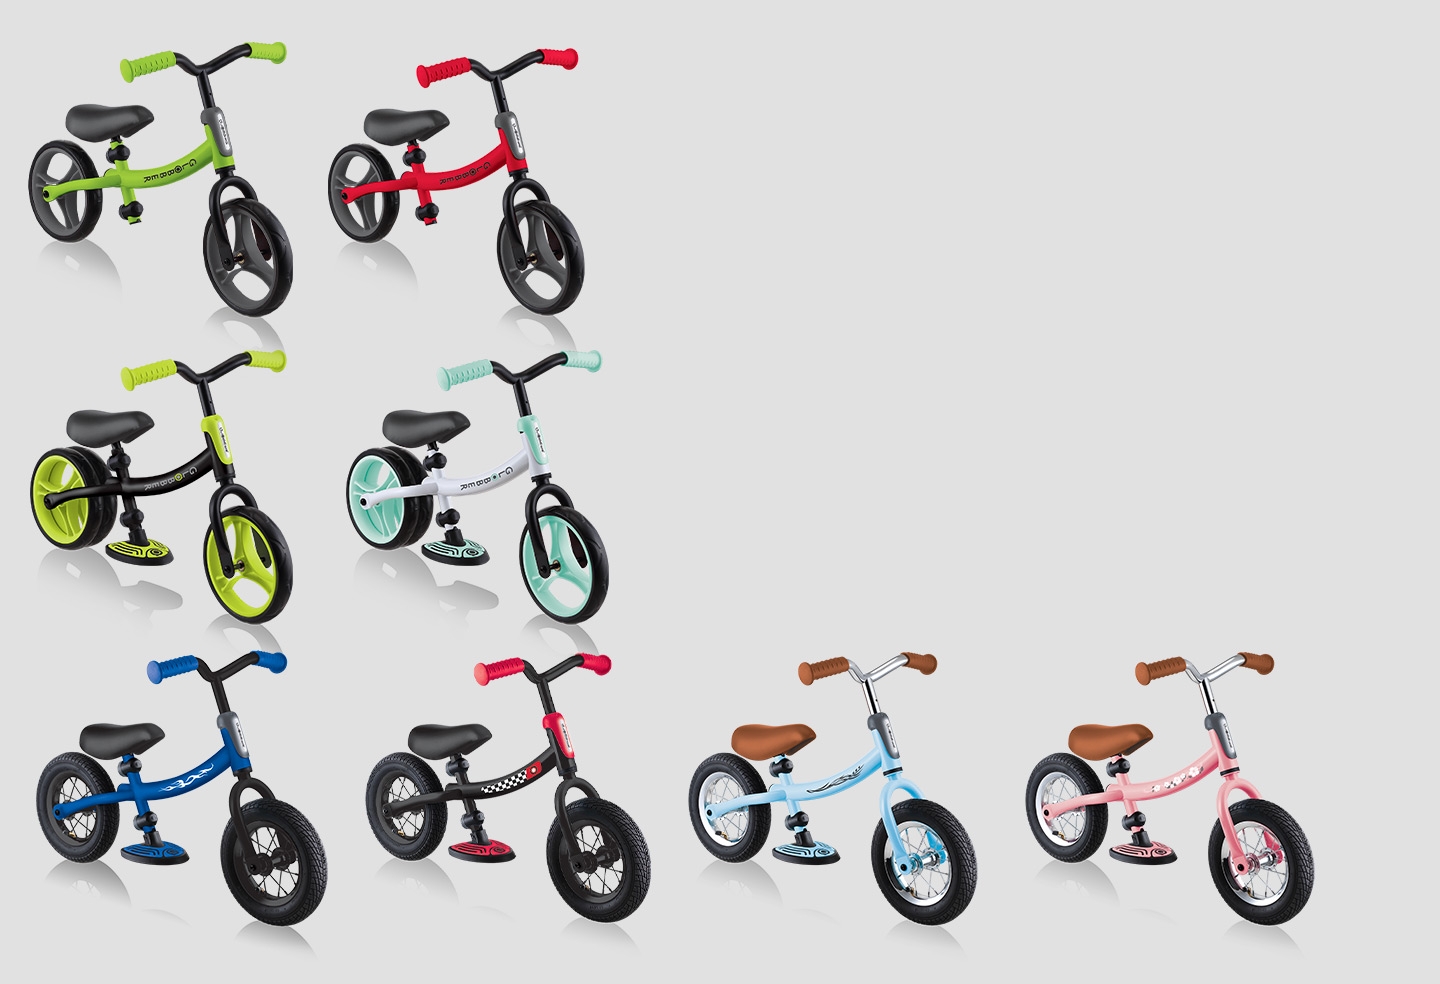 GO BIKE cool balance bikes for toddlers.